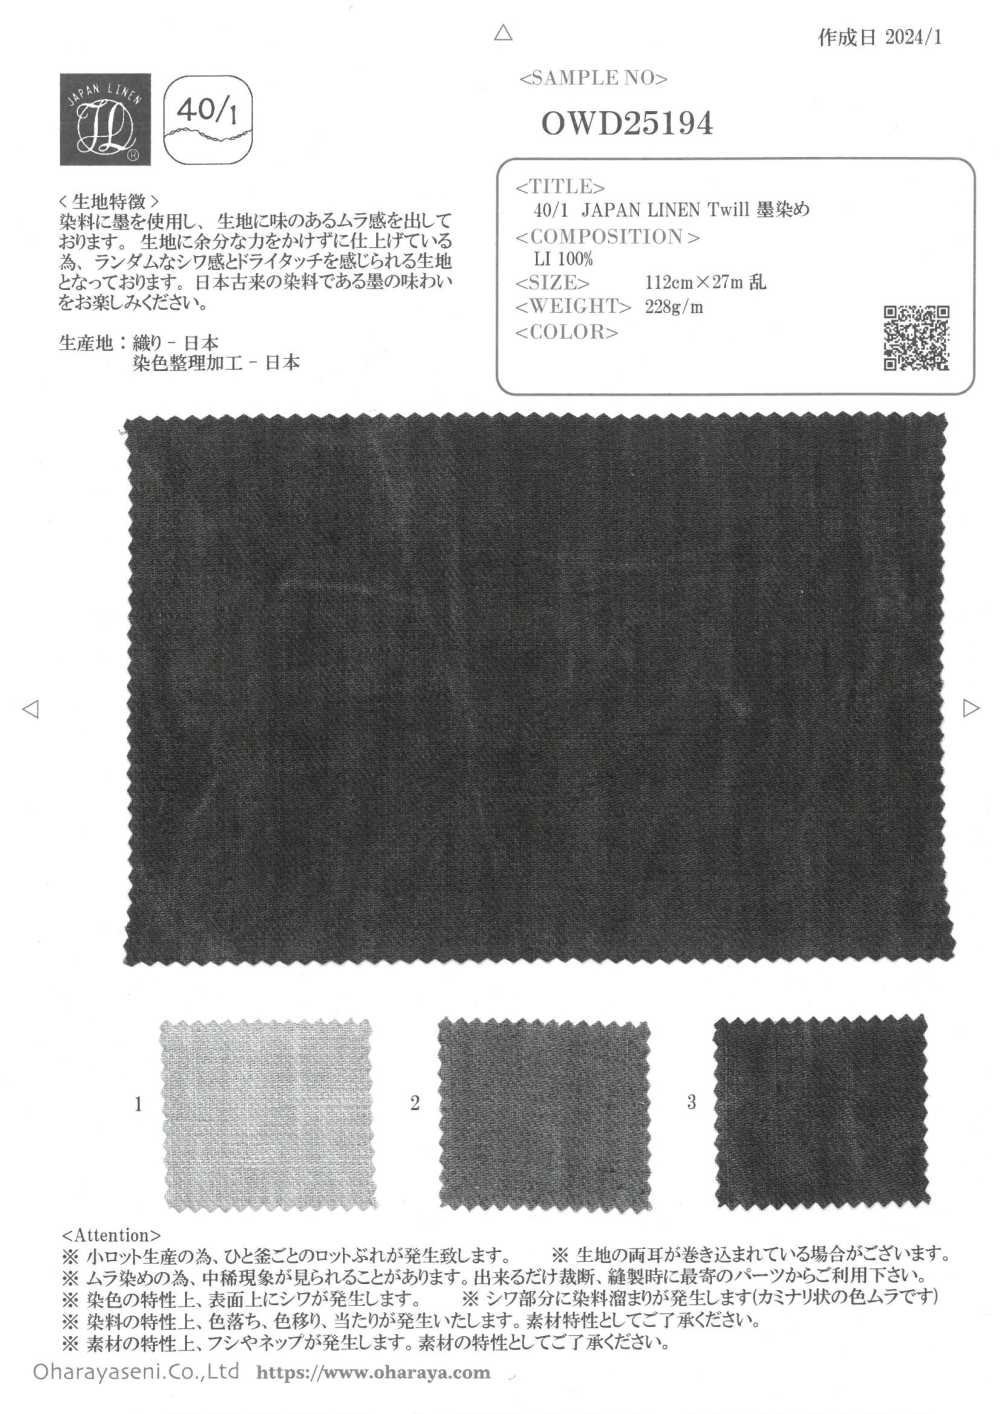 OWD25194 Sarga De Lino Japonés 40/1 Teñida Con Tinta[Fabrica Textil] Oharayaseni